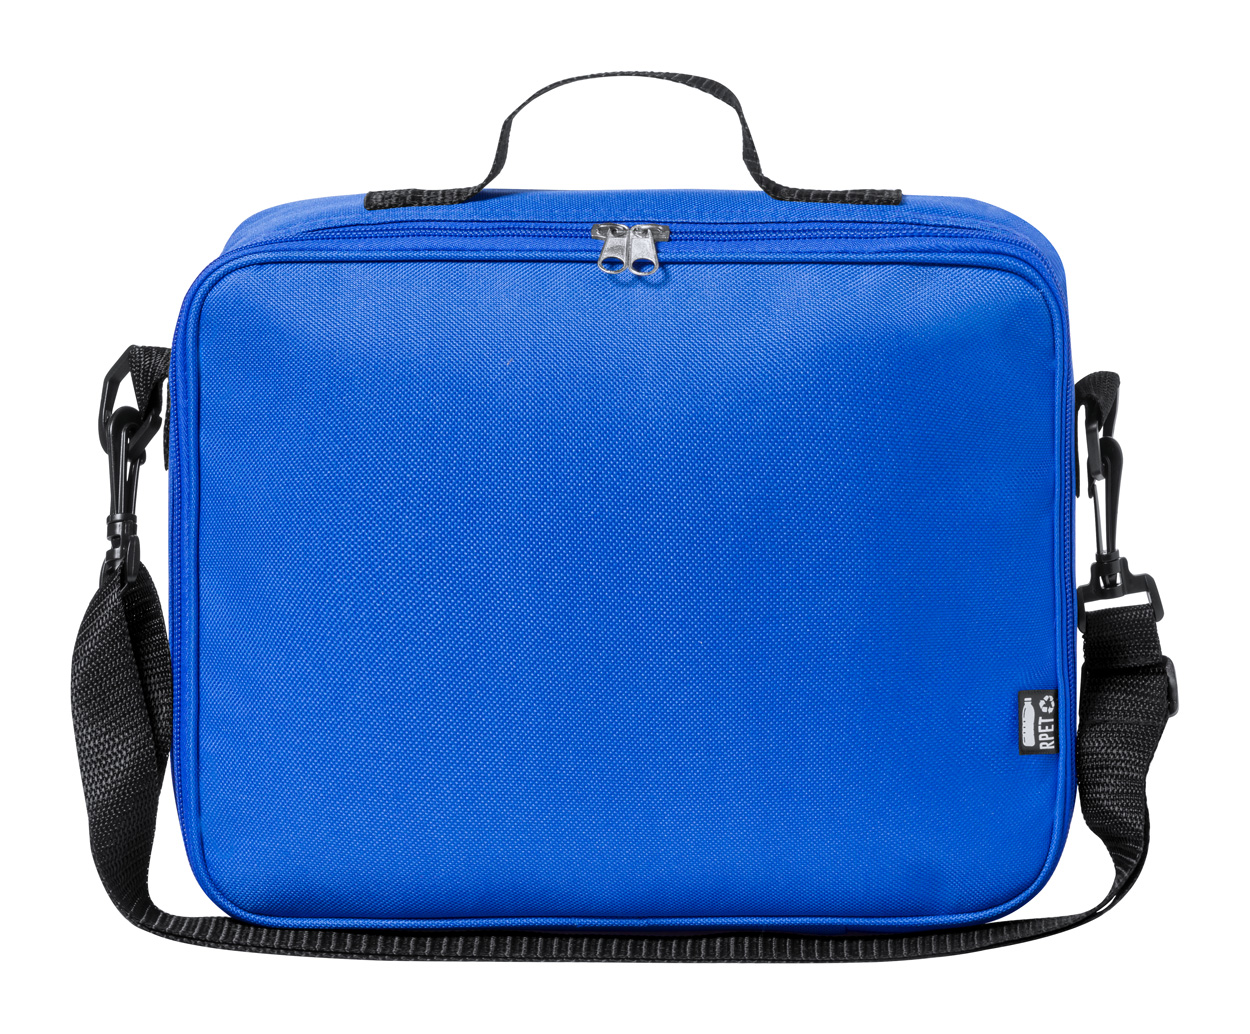 Aitanax cooler bag - blue